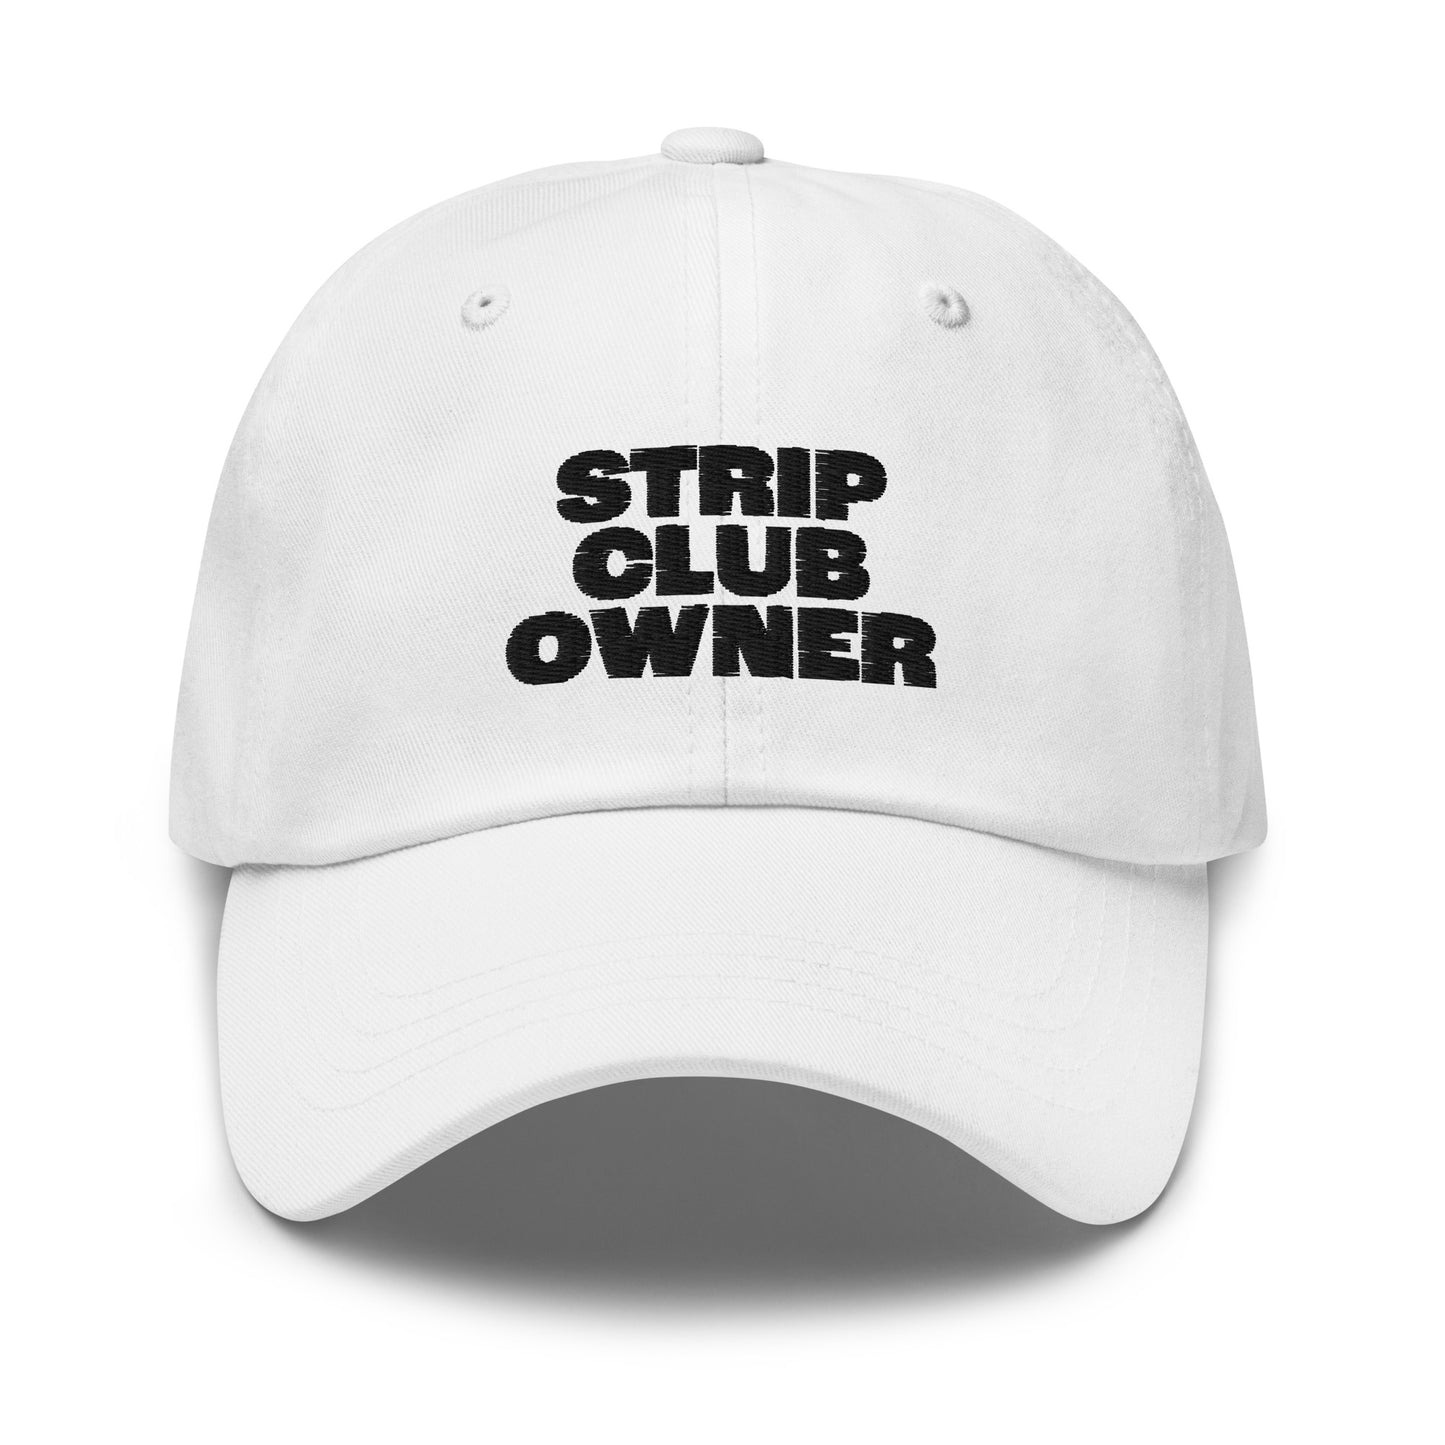 Strip Club Owner Hat